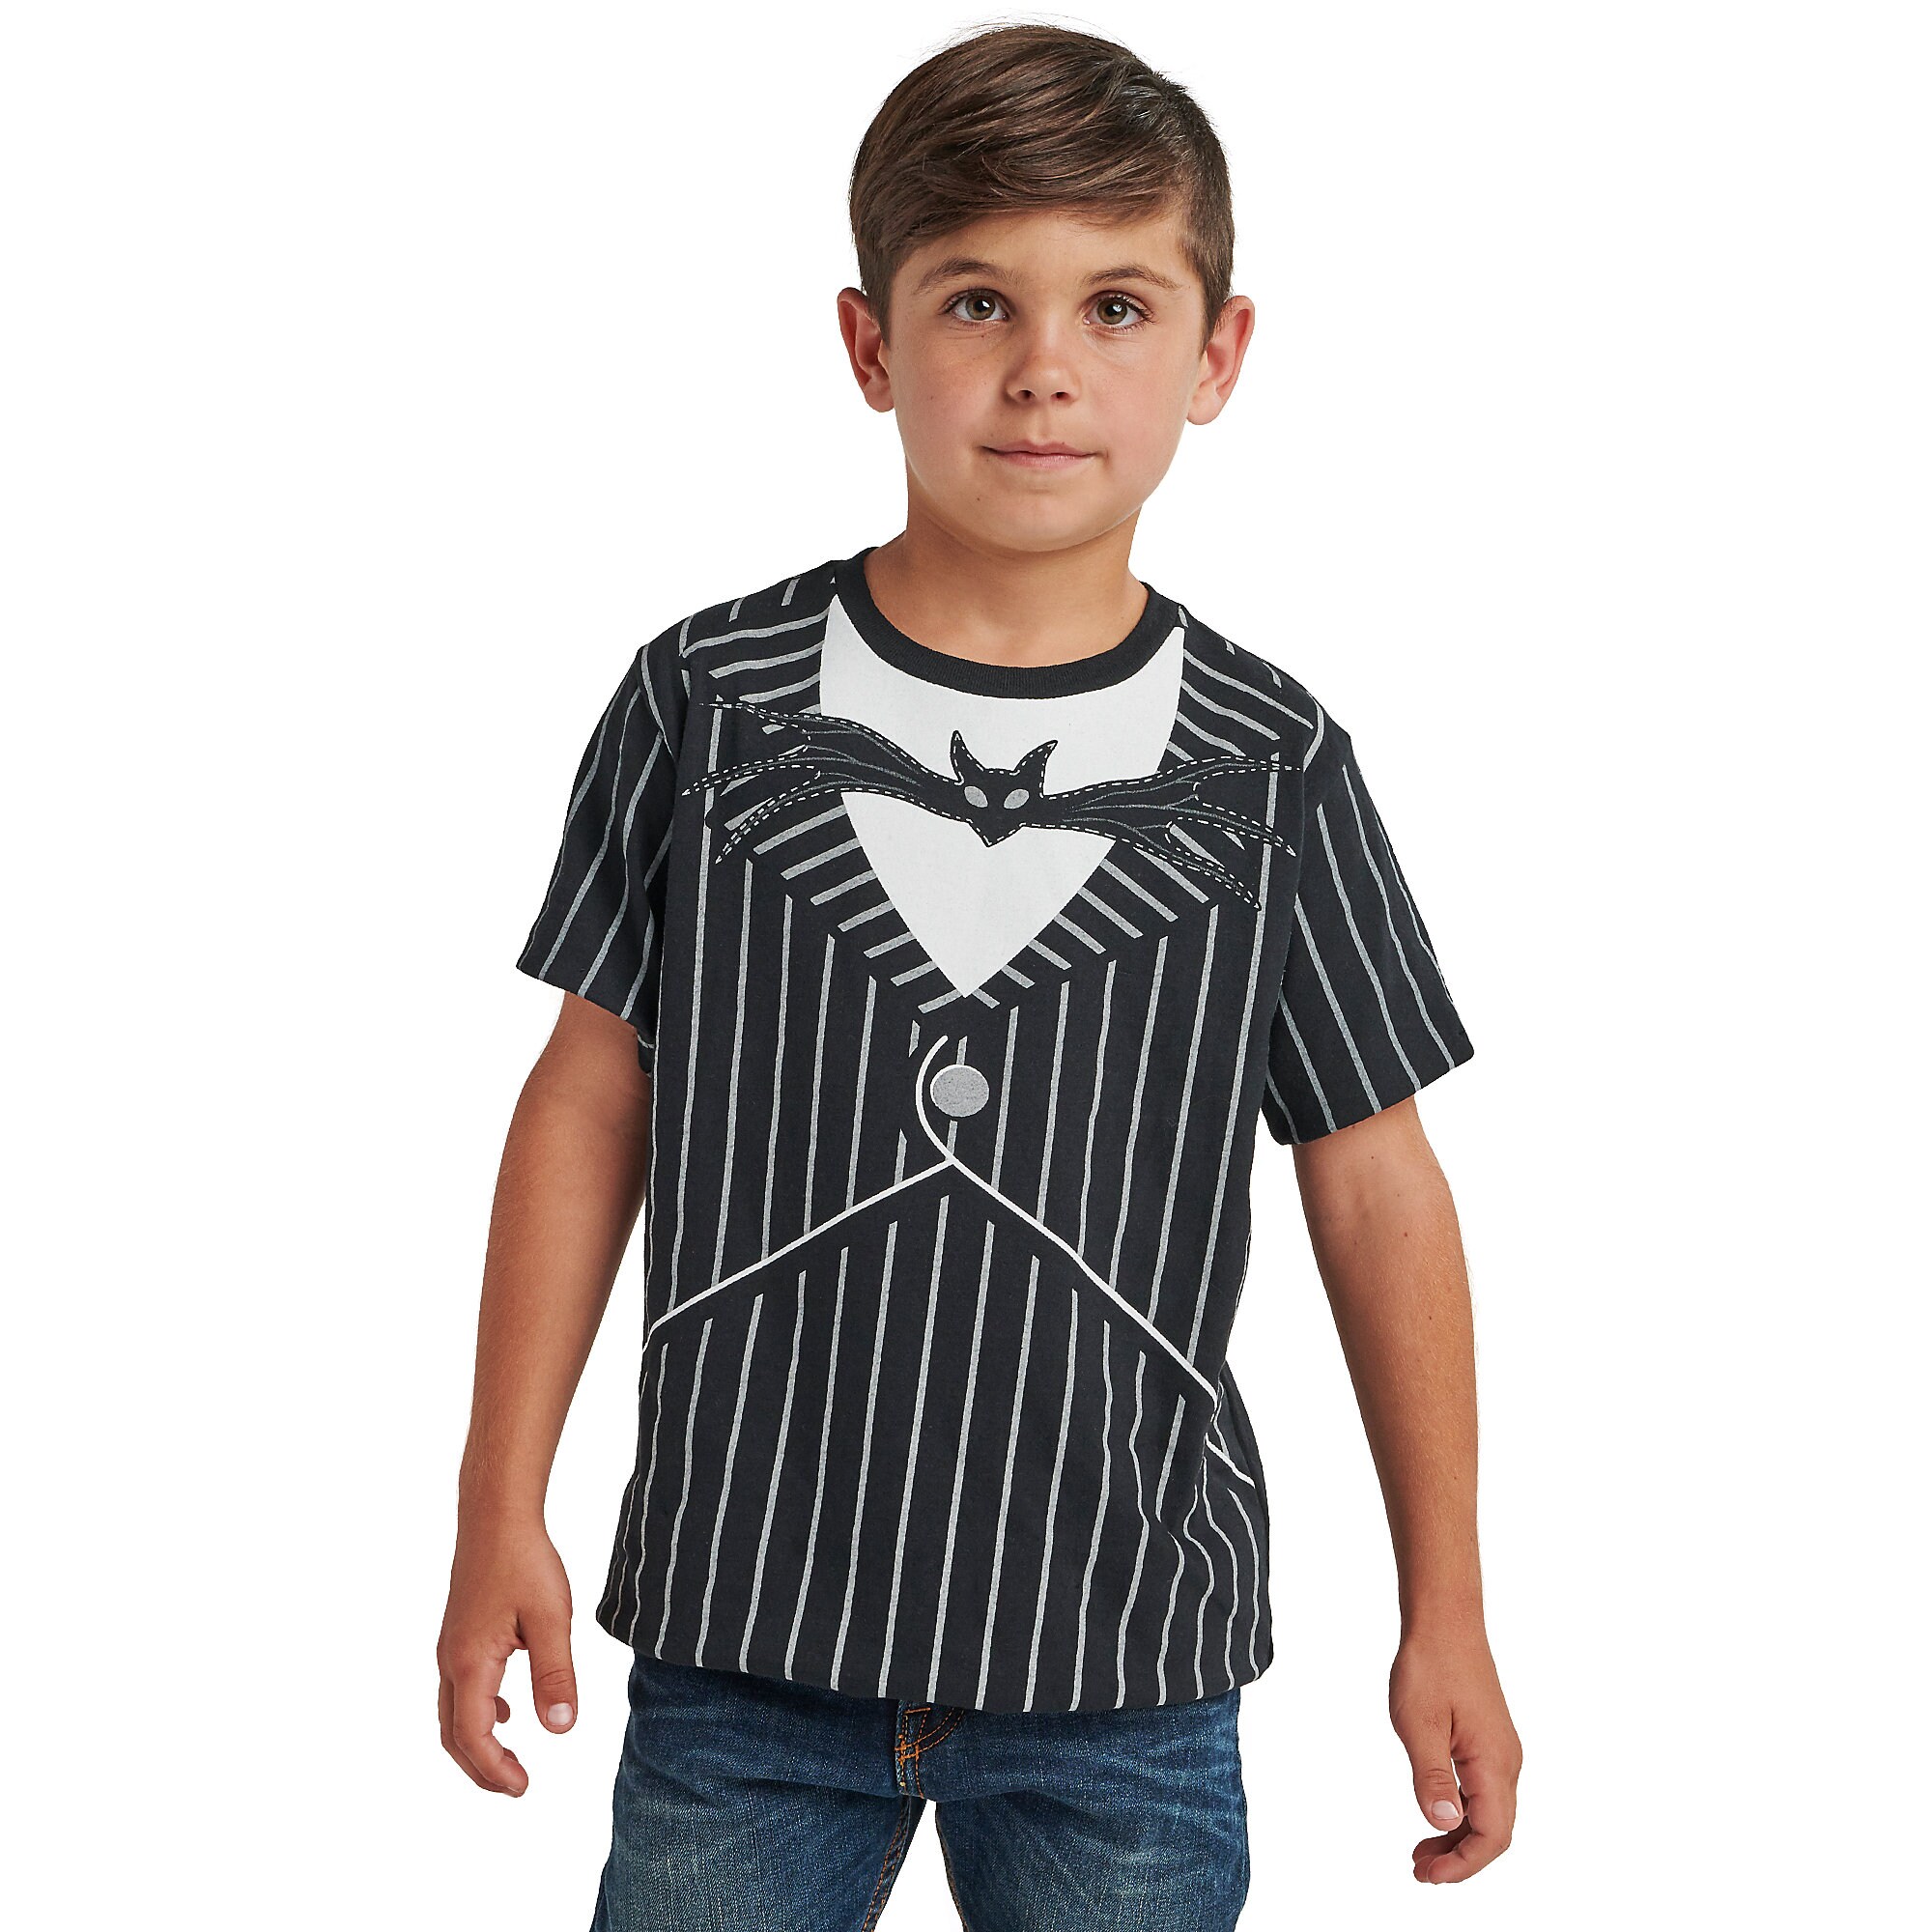 Jack Skellington Costume T-Shirt for Boys